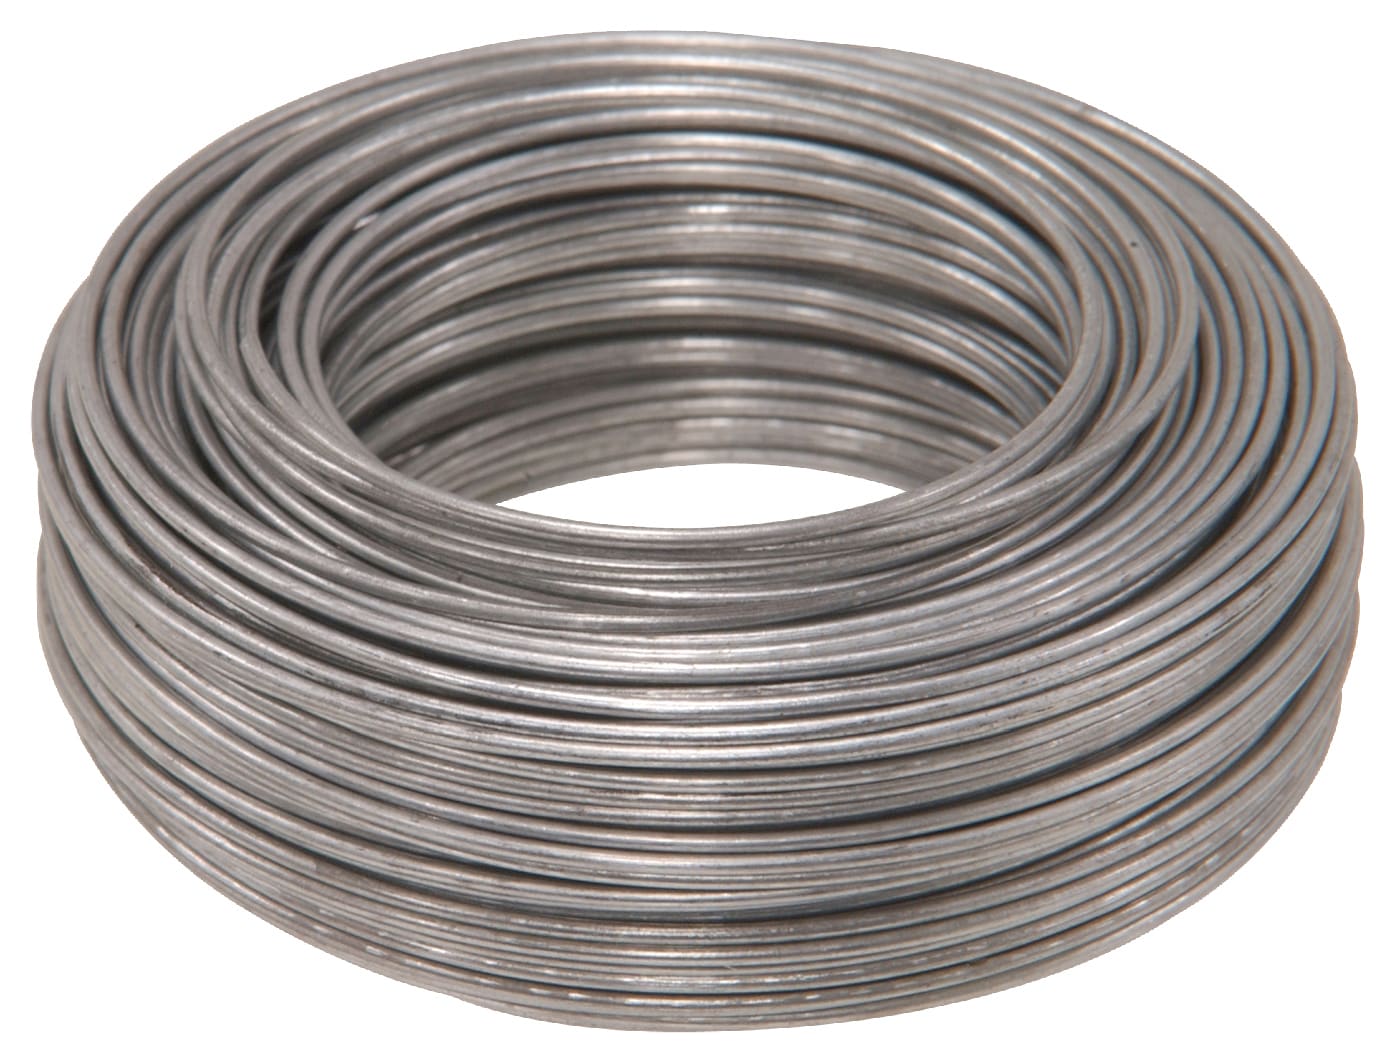 12 26 Gauge Galvanized Steel Wires - Ryan Quality Control